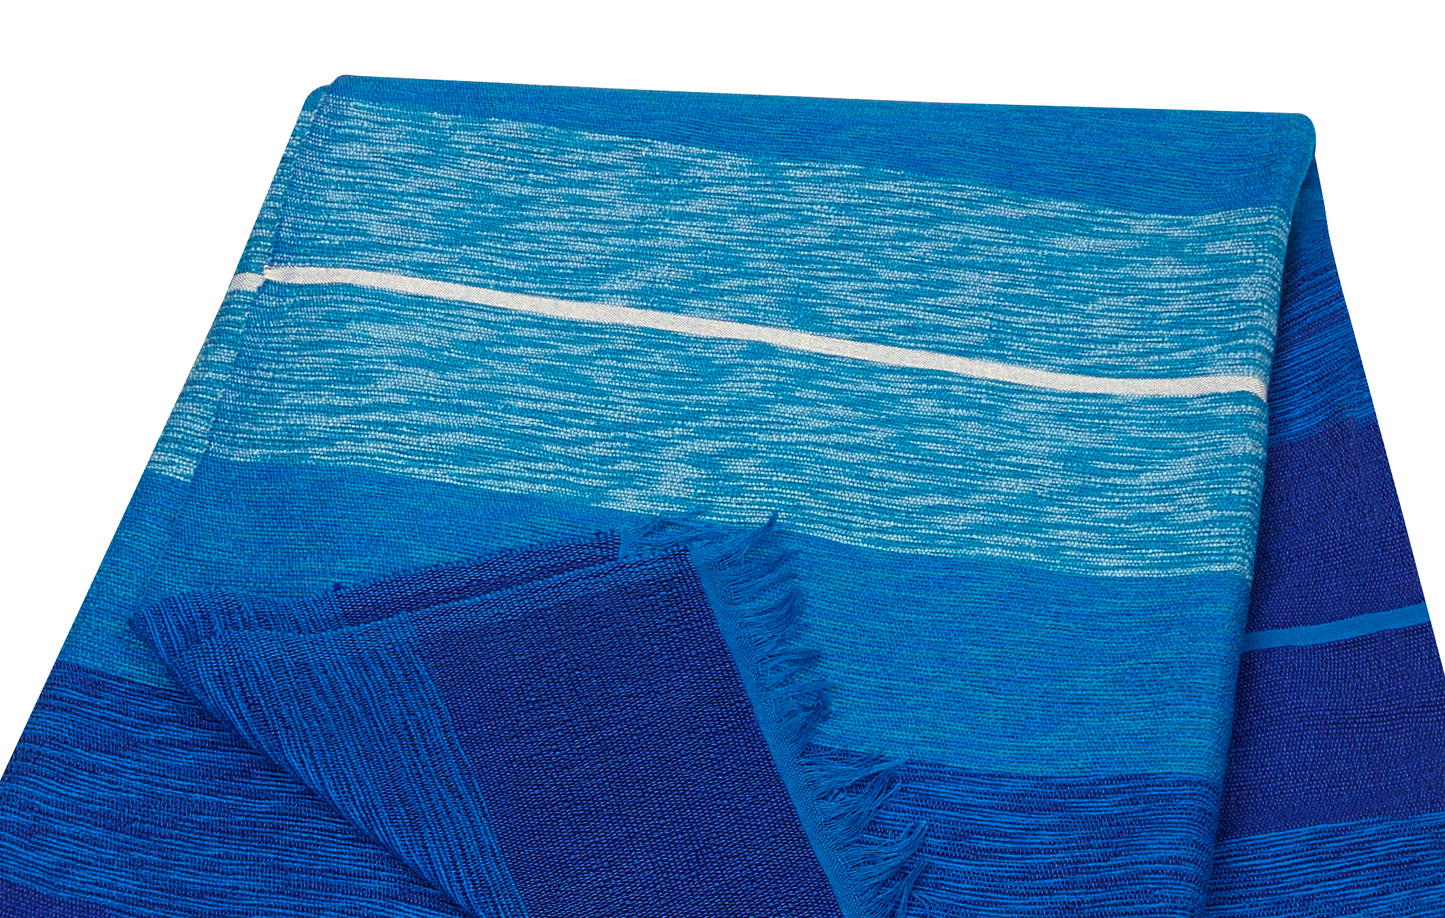 Moroccan Throw Bedspread Sofa Cover Blue Handwoven Wool Sabra Cactus Silk 270 cm x 170 cm